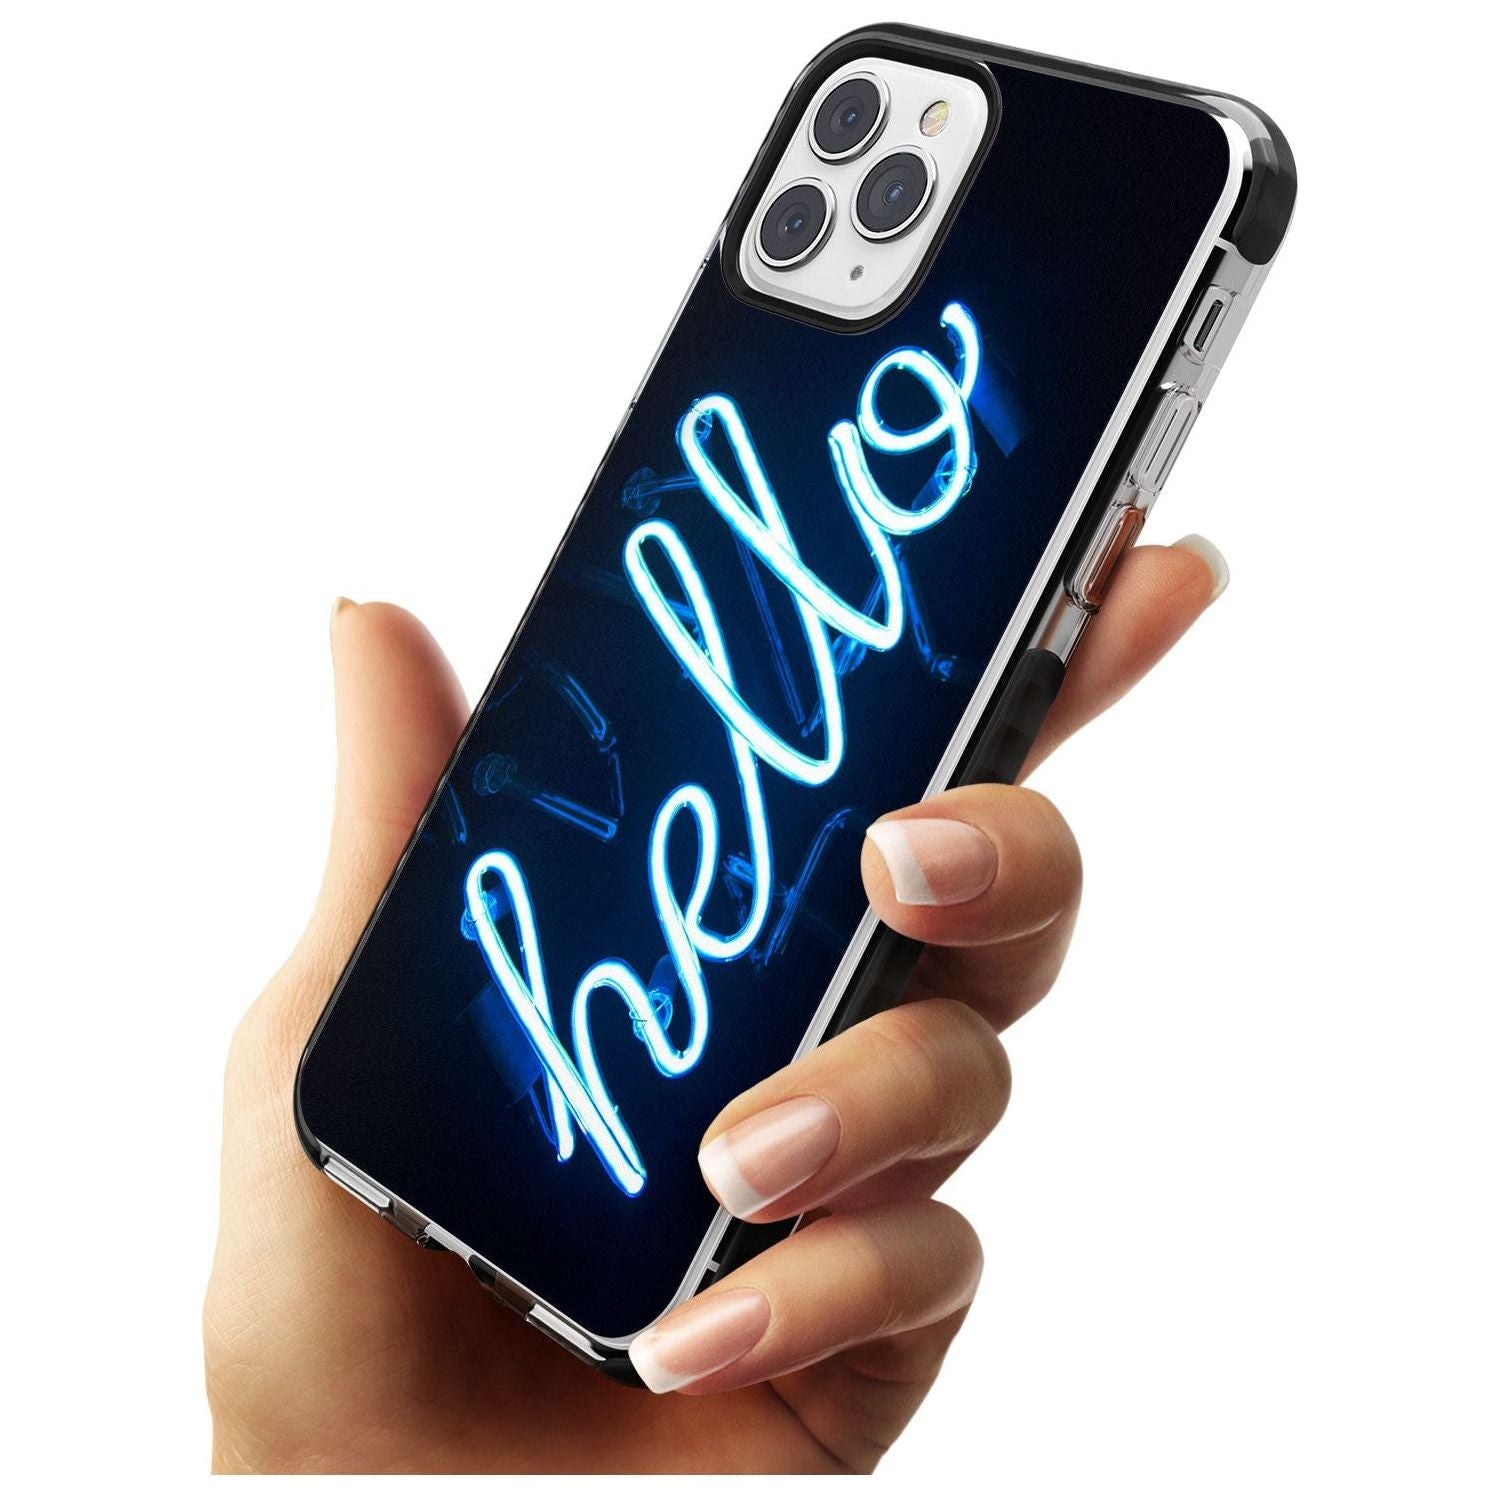 "Hello" Blue Cursive Neon Sign Black Impact Phone Case for iPhone 11 Pro Max